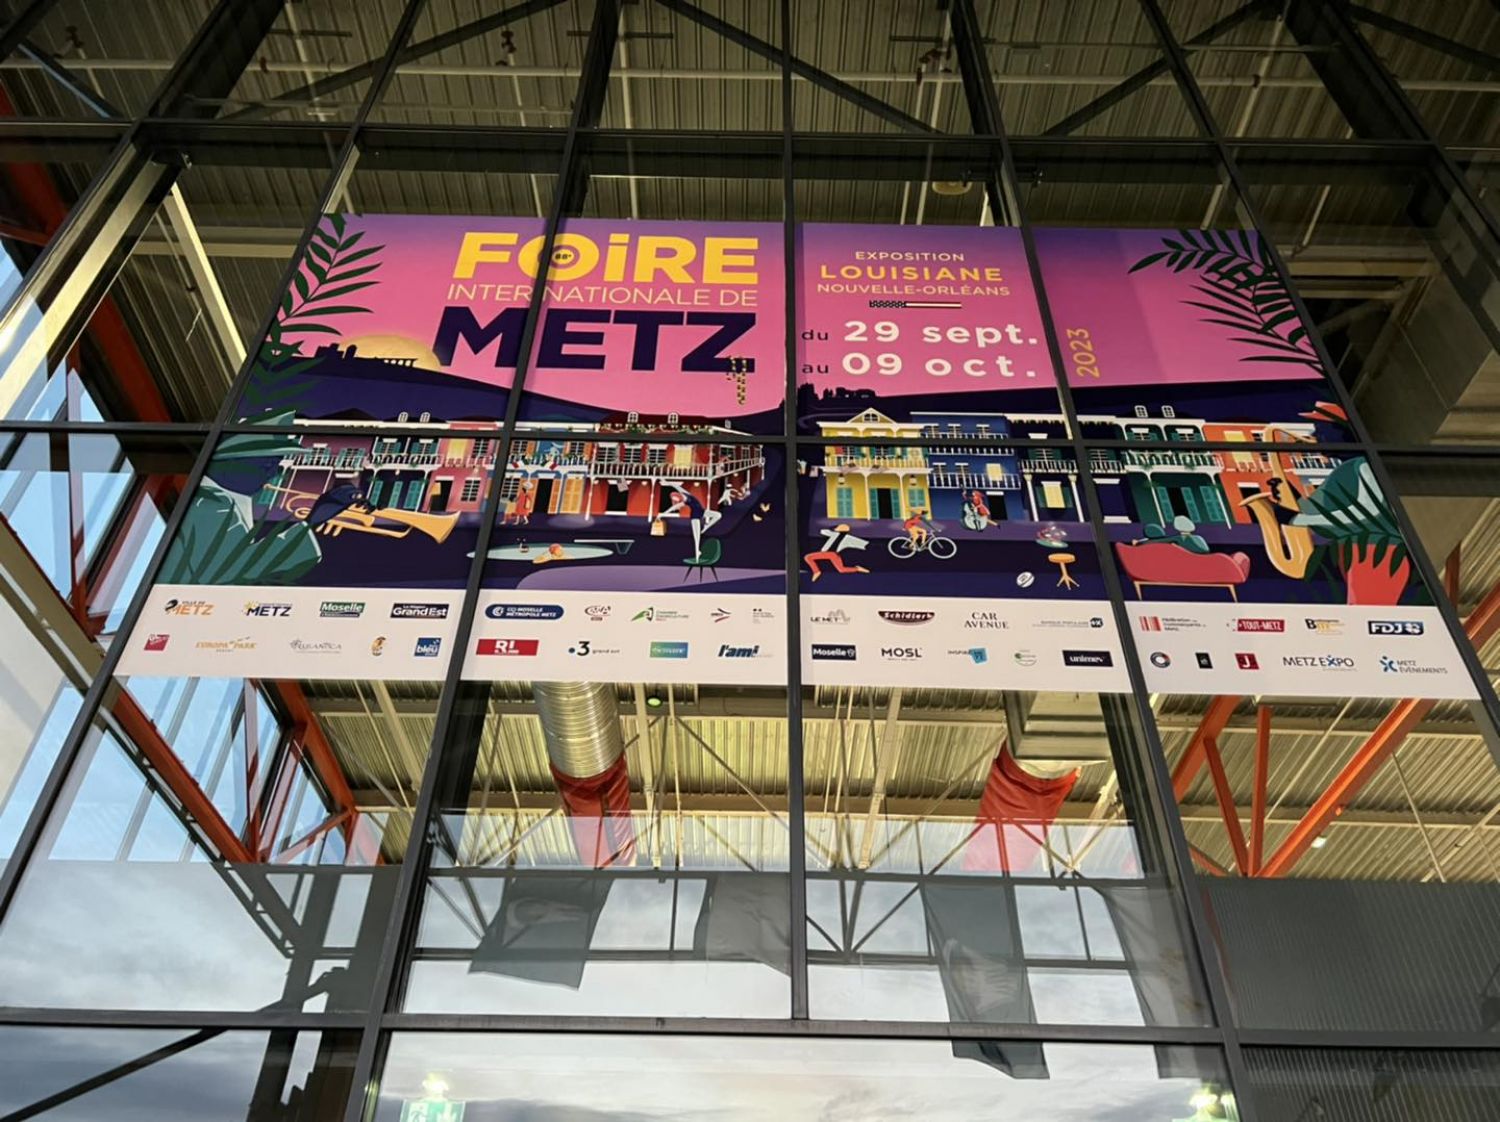 La Foire Internationale de Metz s'ouvre aujourd'hui avec 500 exposants